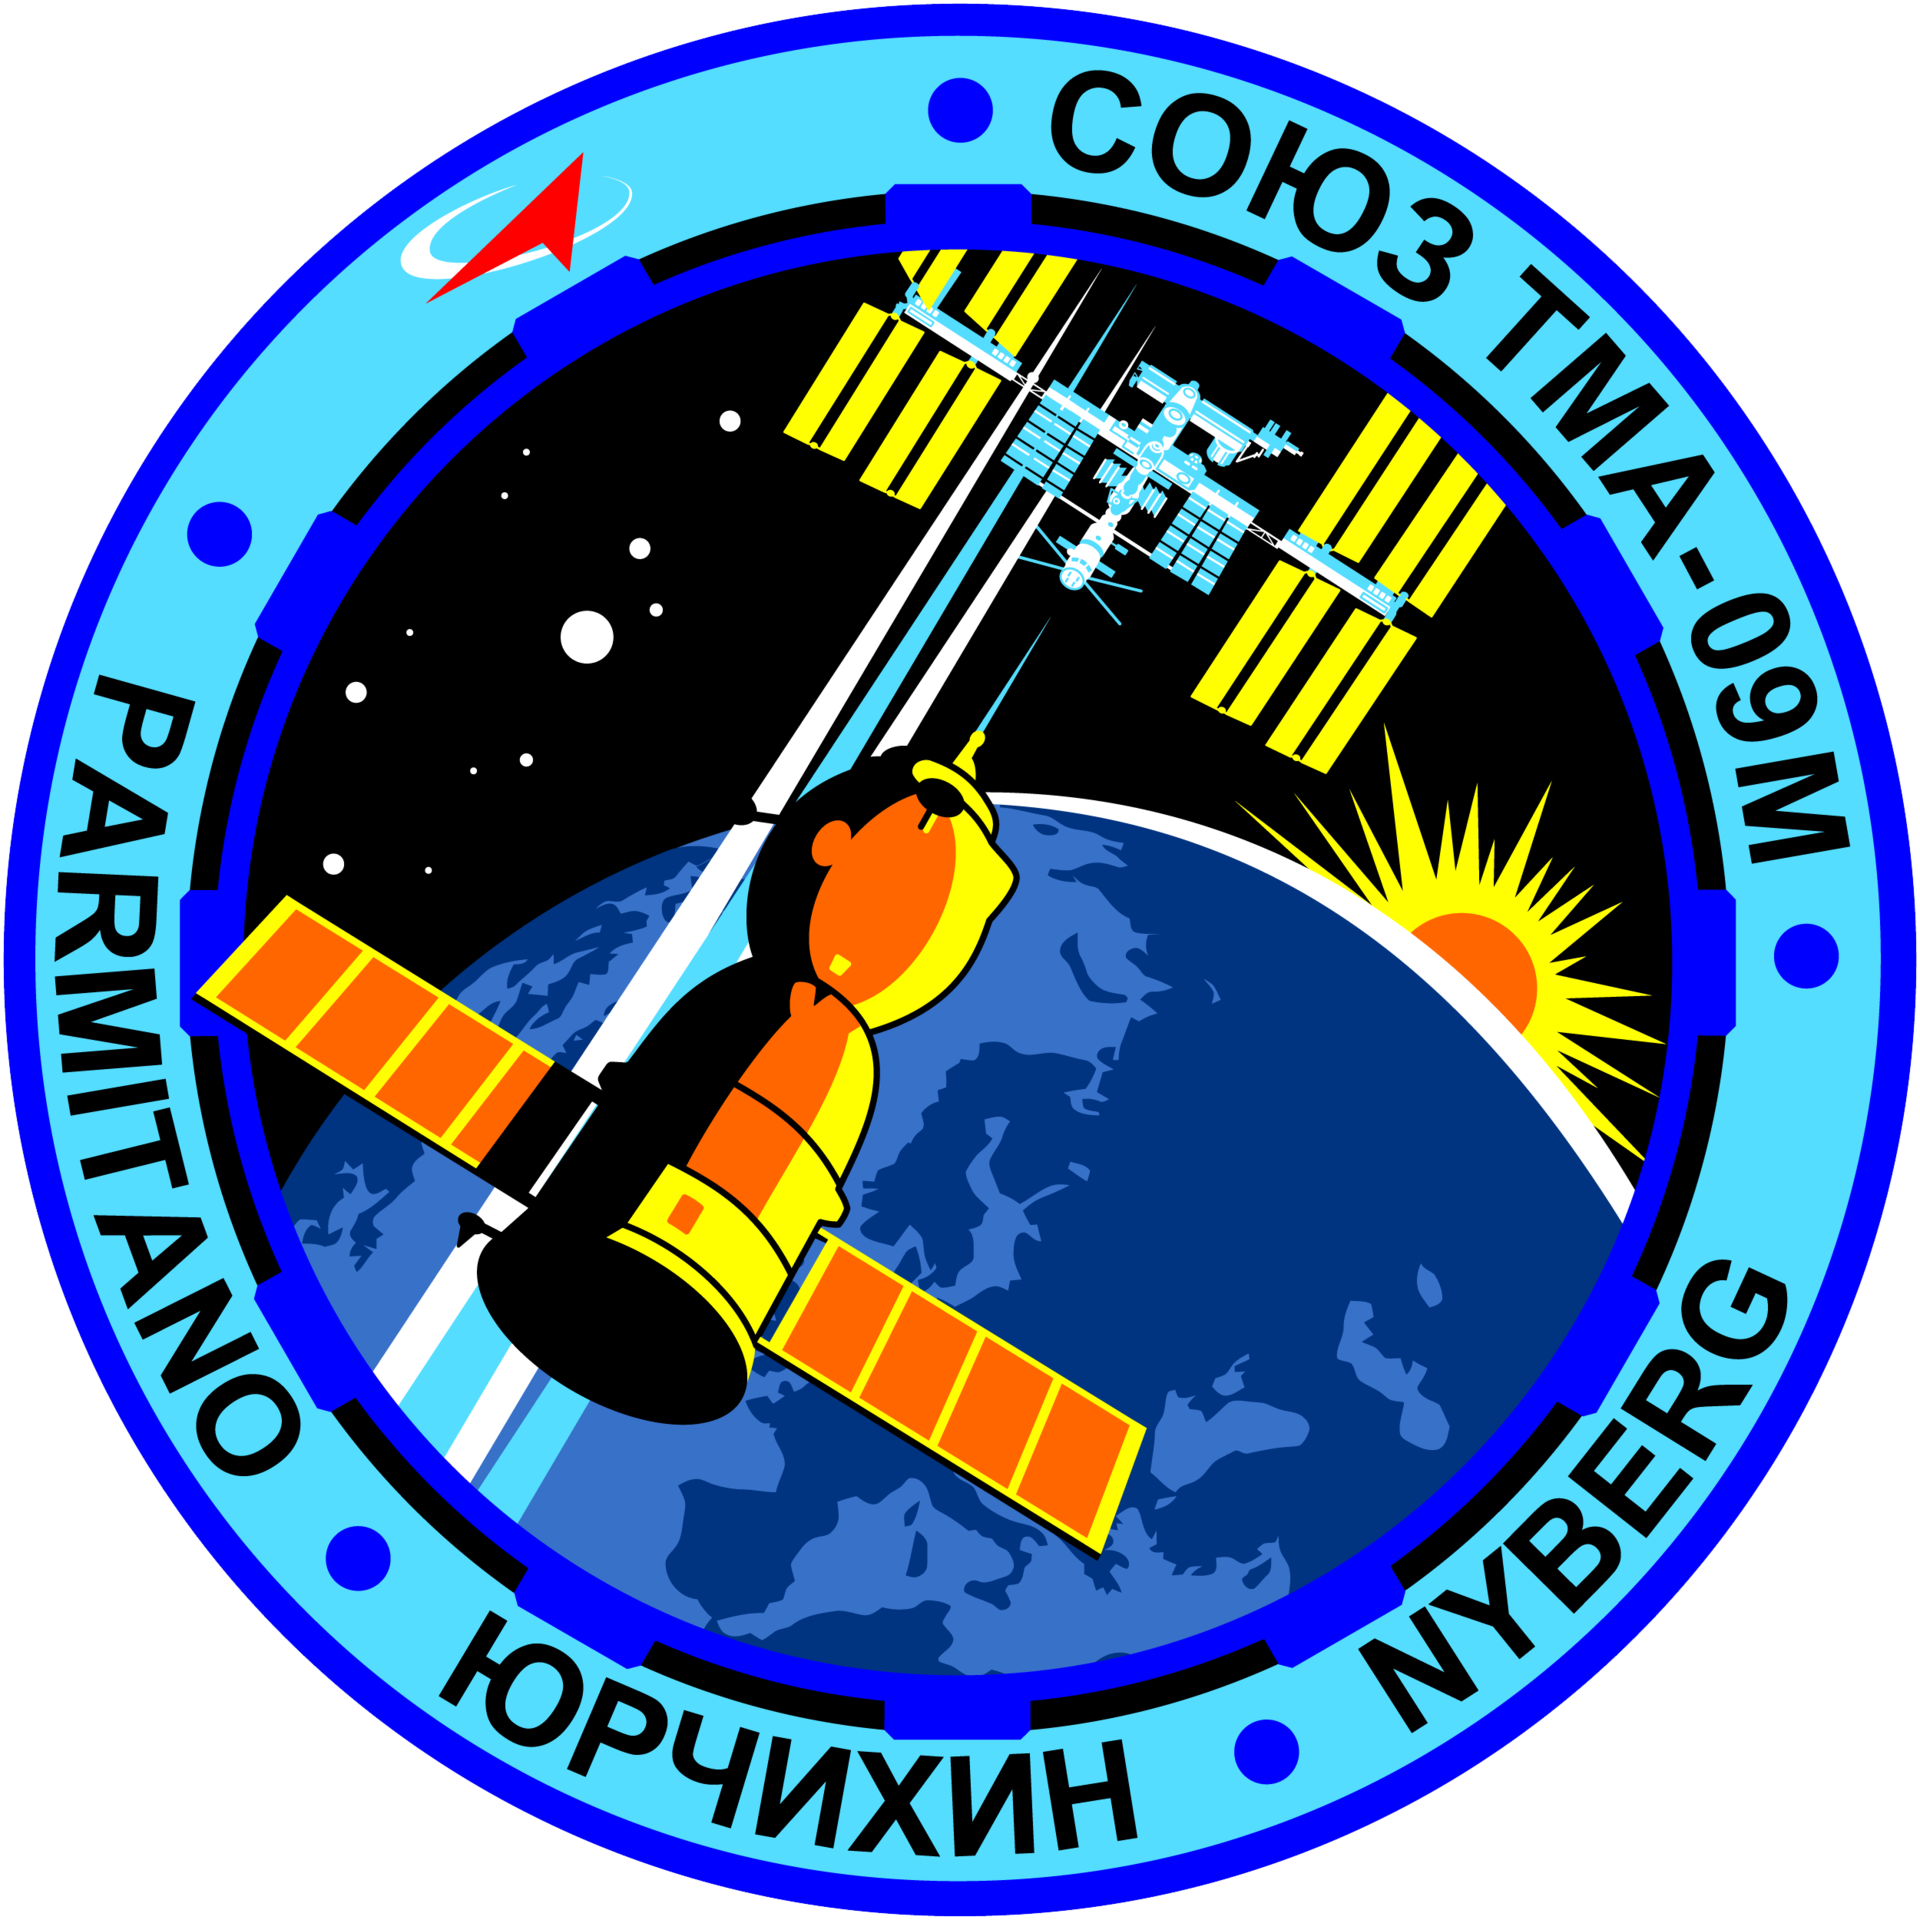 Mission patch for Soyuz TMA-09M